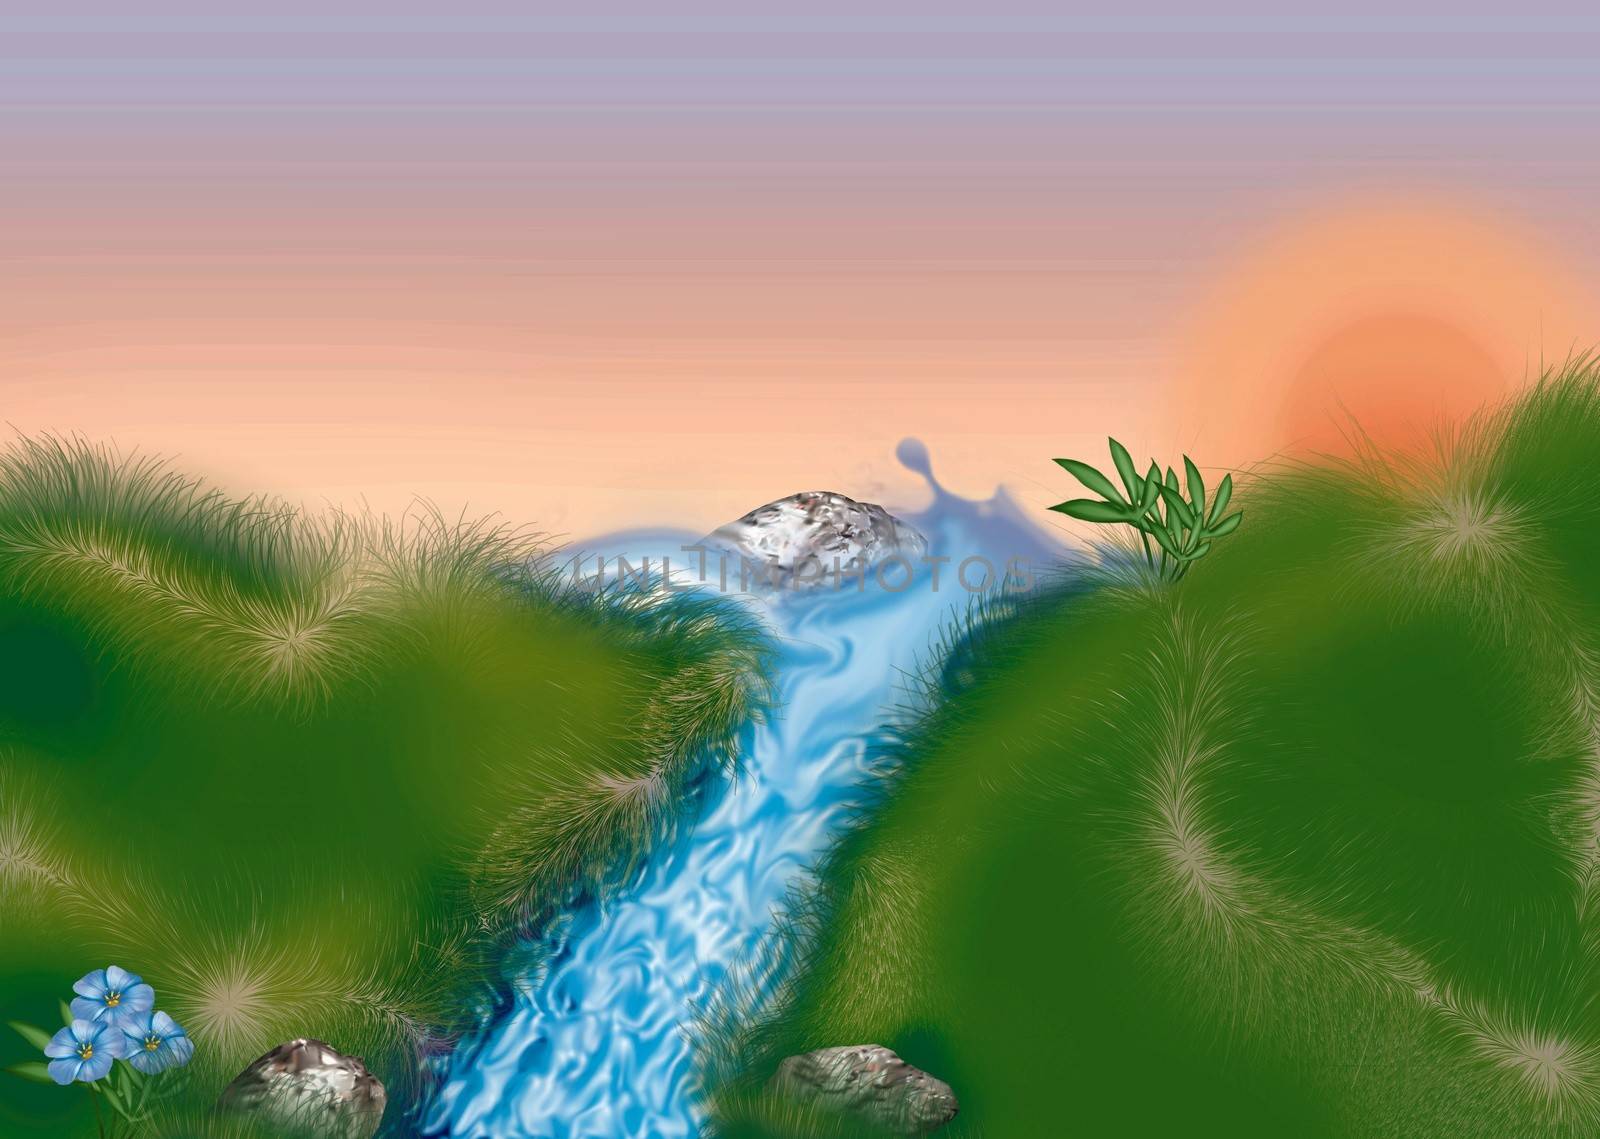 Mountain Stream by illustratorCZ